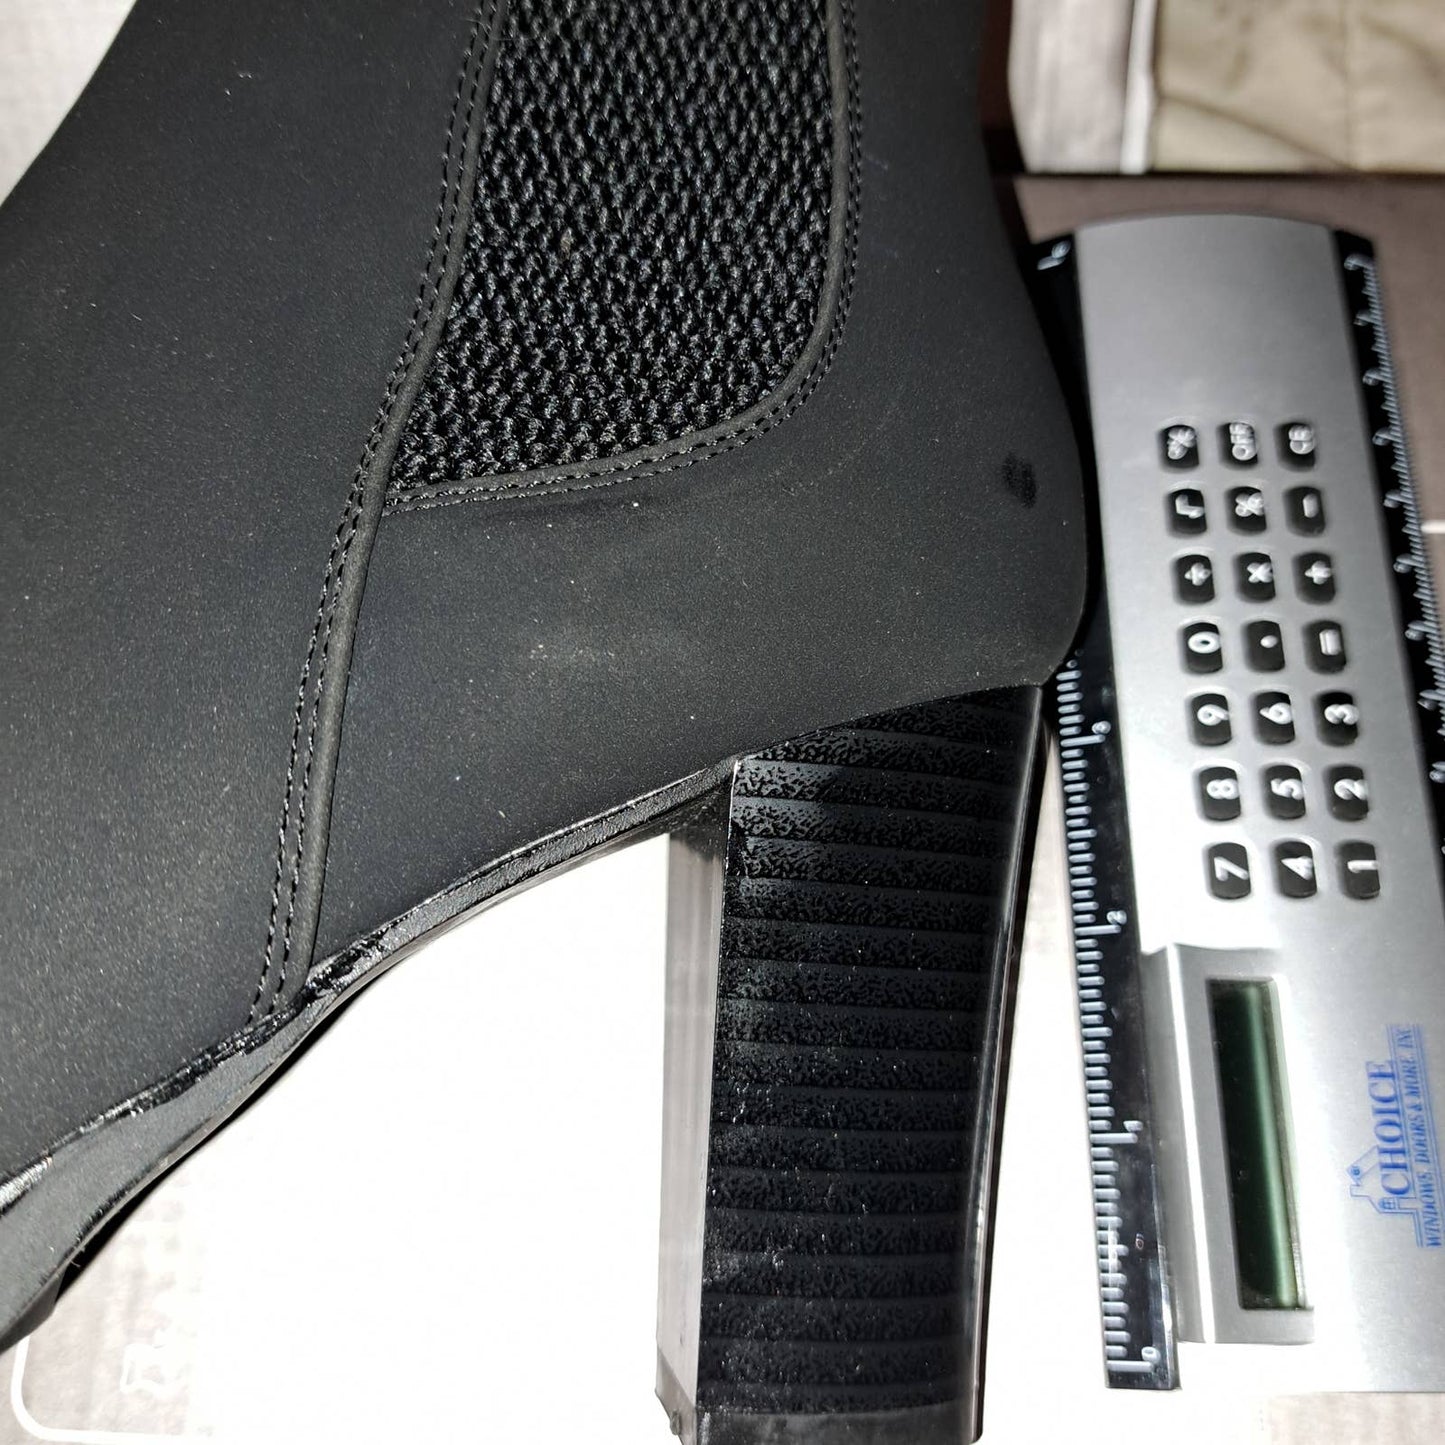 JUMEX Black Chelsea Boots - EU 37 / US 6.5 Rich Black 3 inch heel